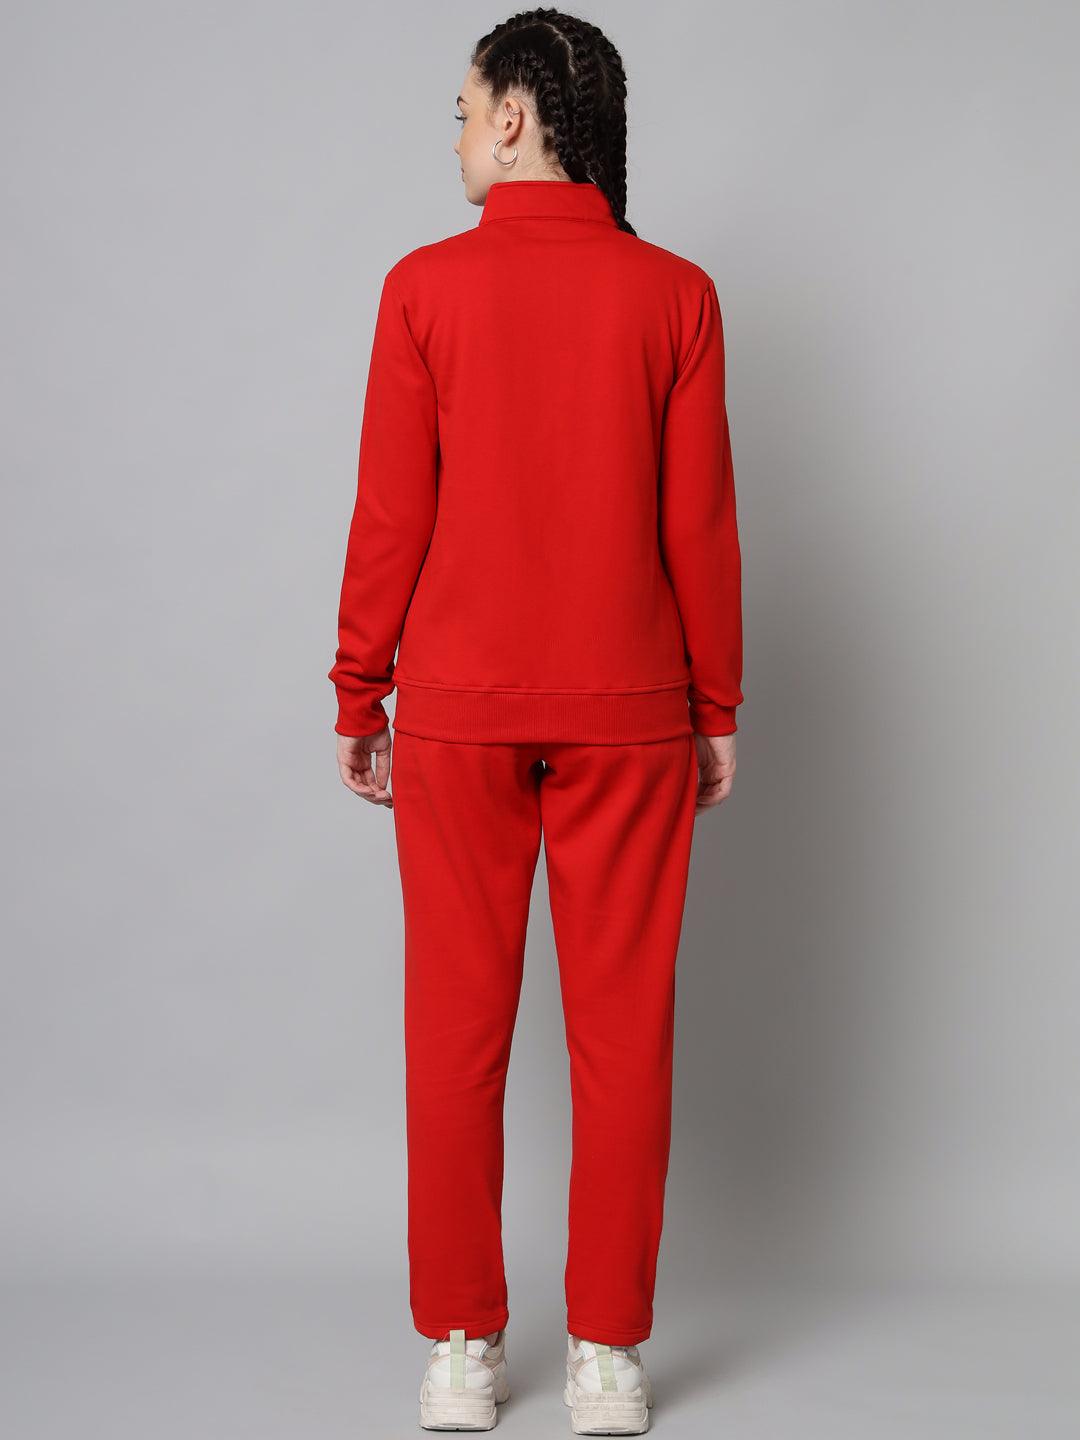 Griffel Women Solid Fleece Zipper Neck Sweatshirt and Joggers Full set Red Tracksuit - griffel